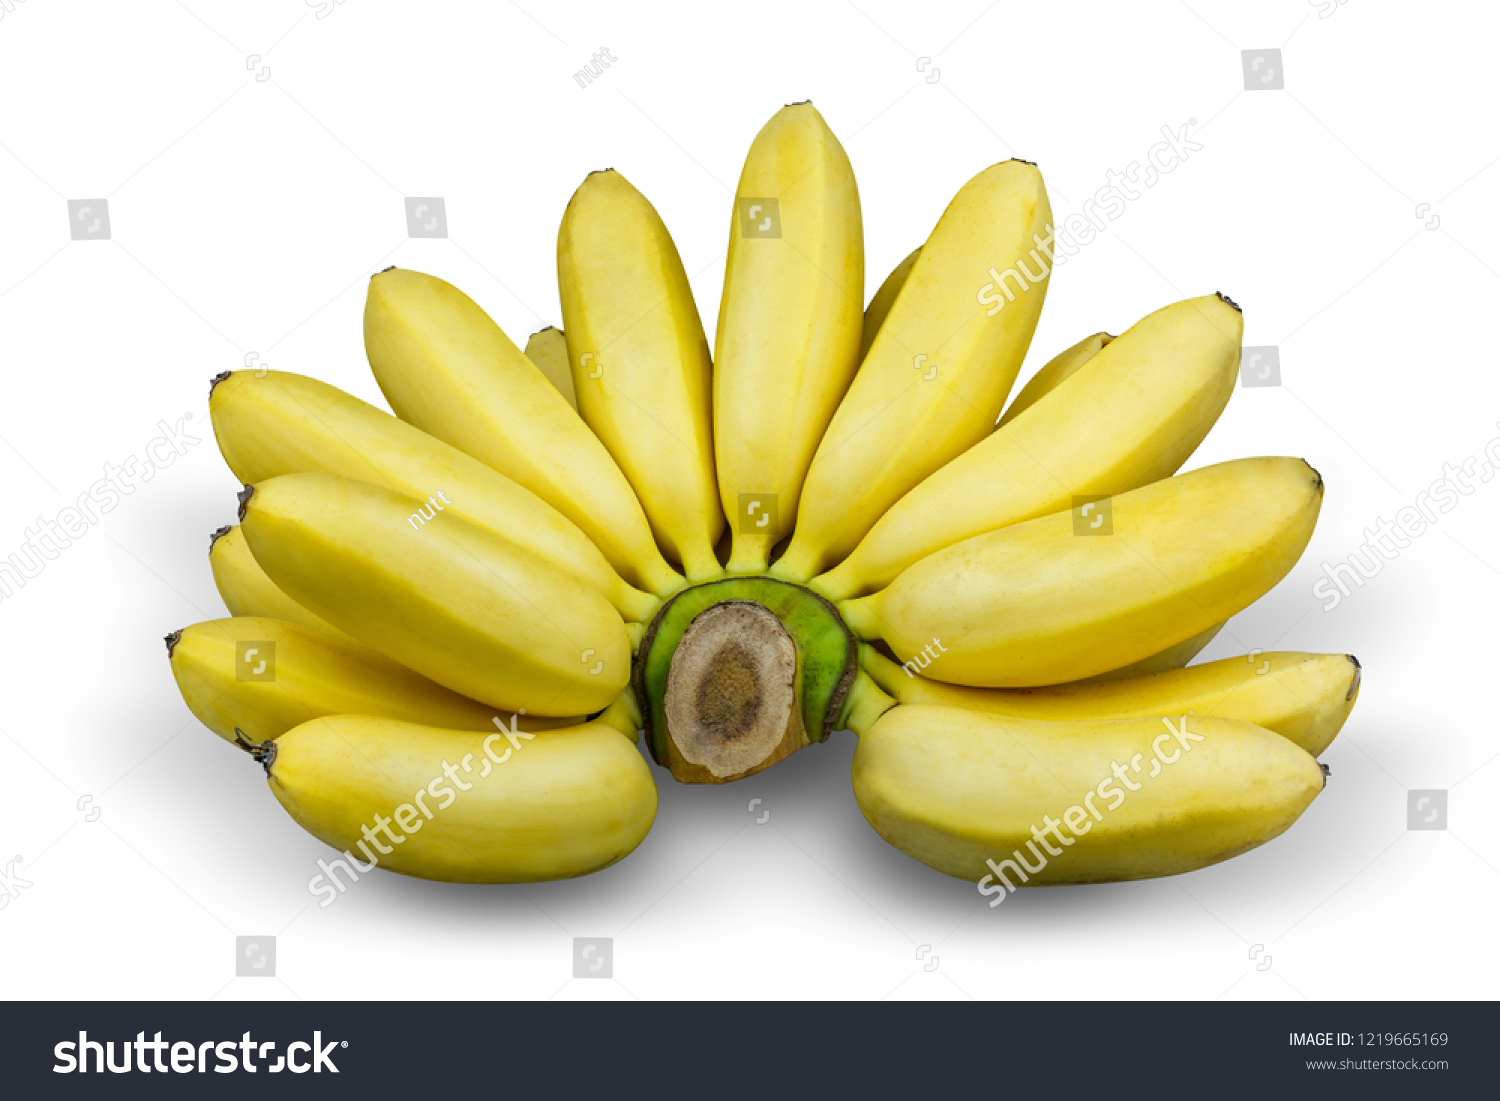 Lady finger banana